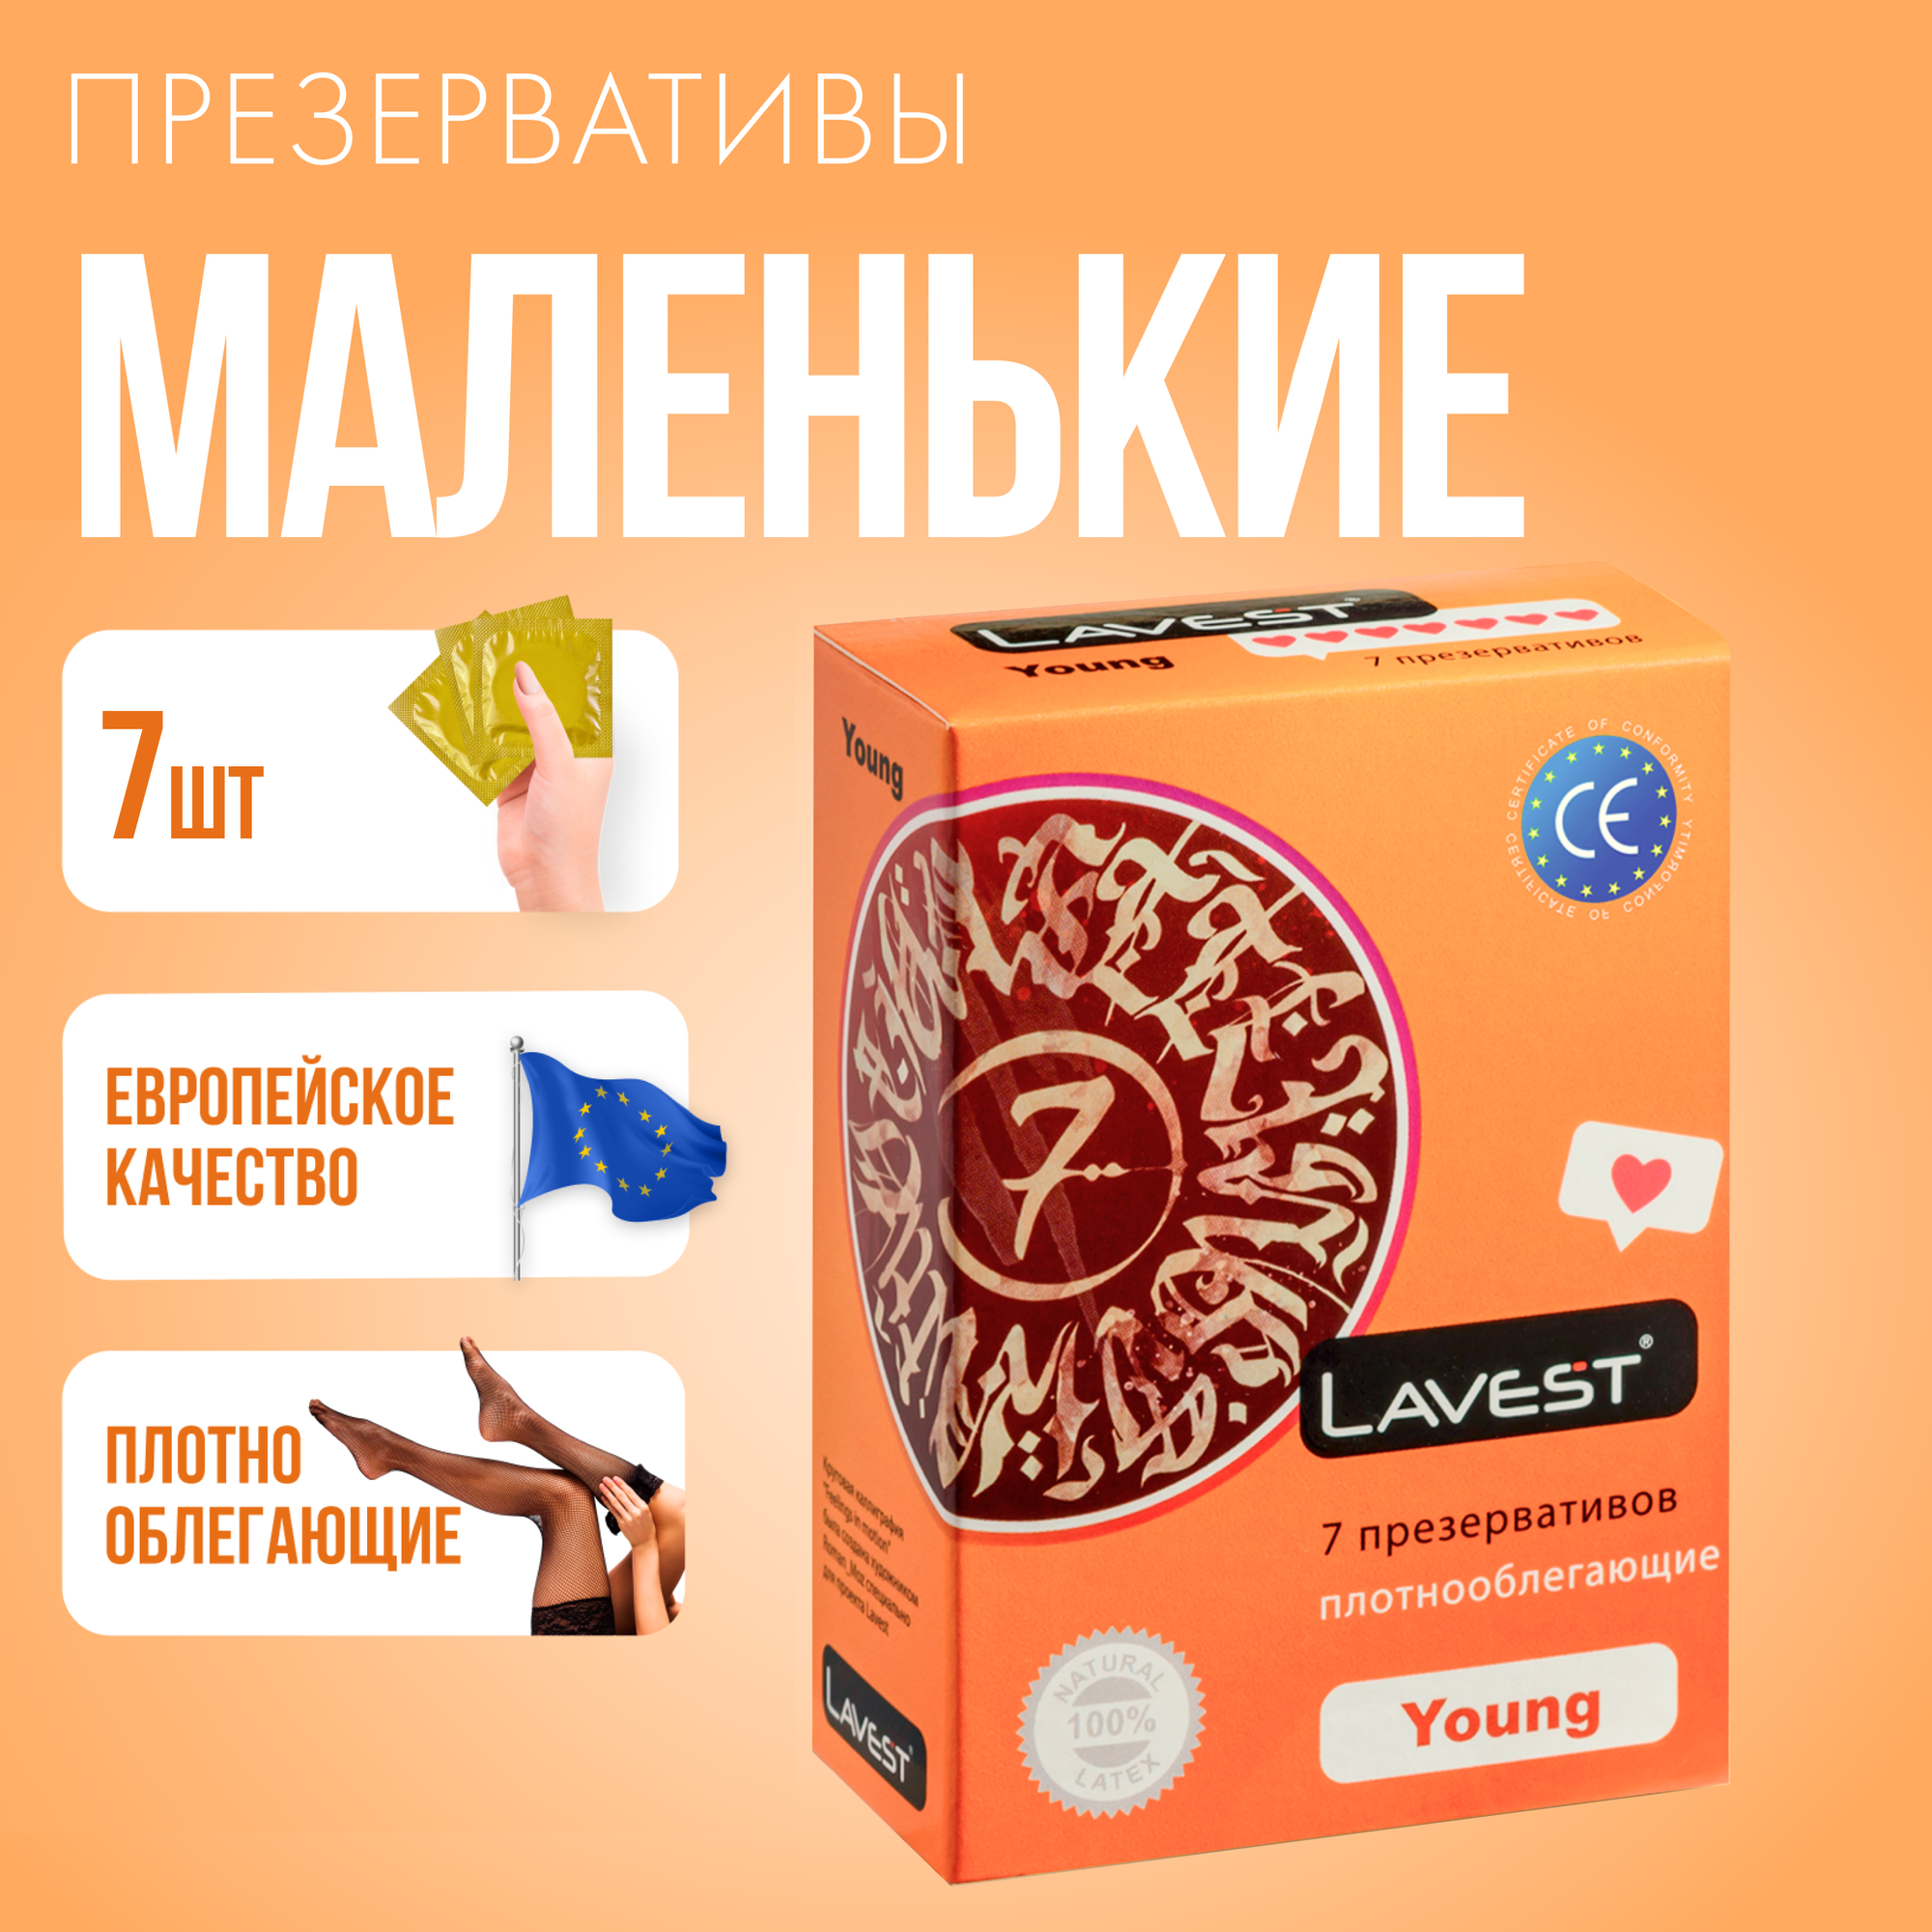 Lavest Young презервативы уменьшенного размера 7 шт